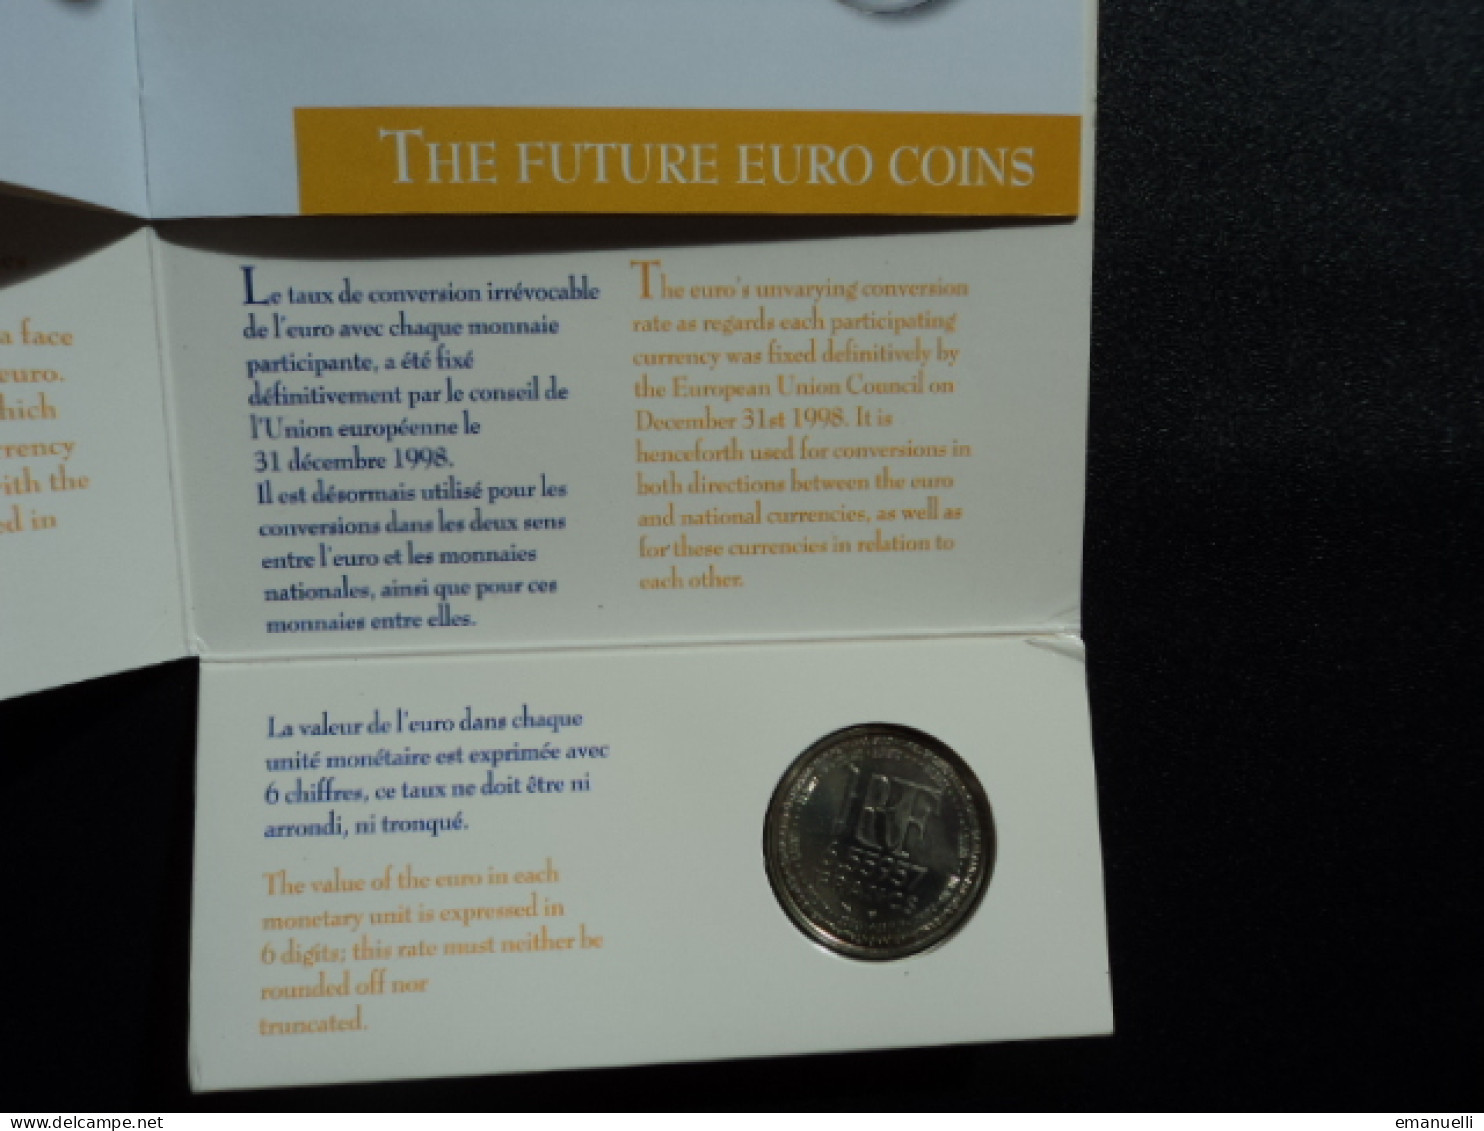 EUROPA : La Pièce Symbole De La Parité De L'euro  * - Conmemorativos